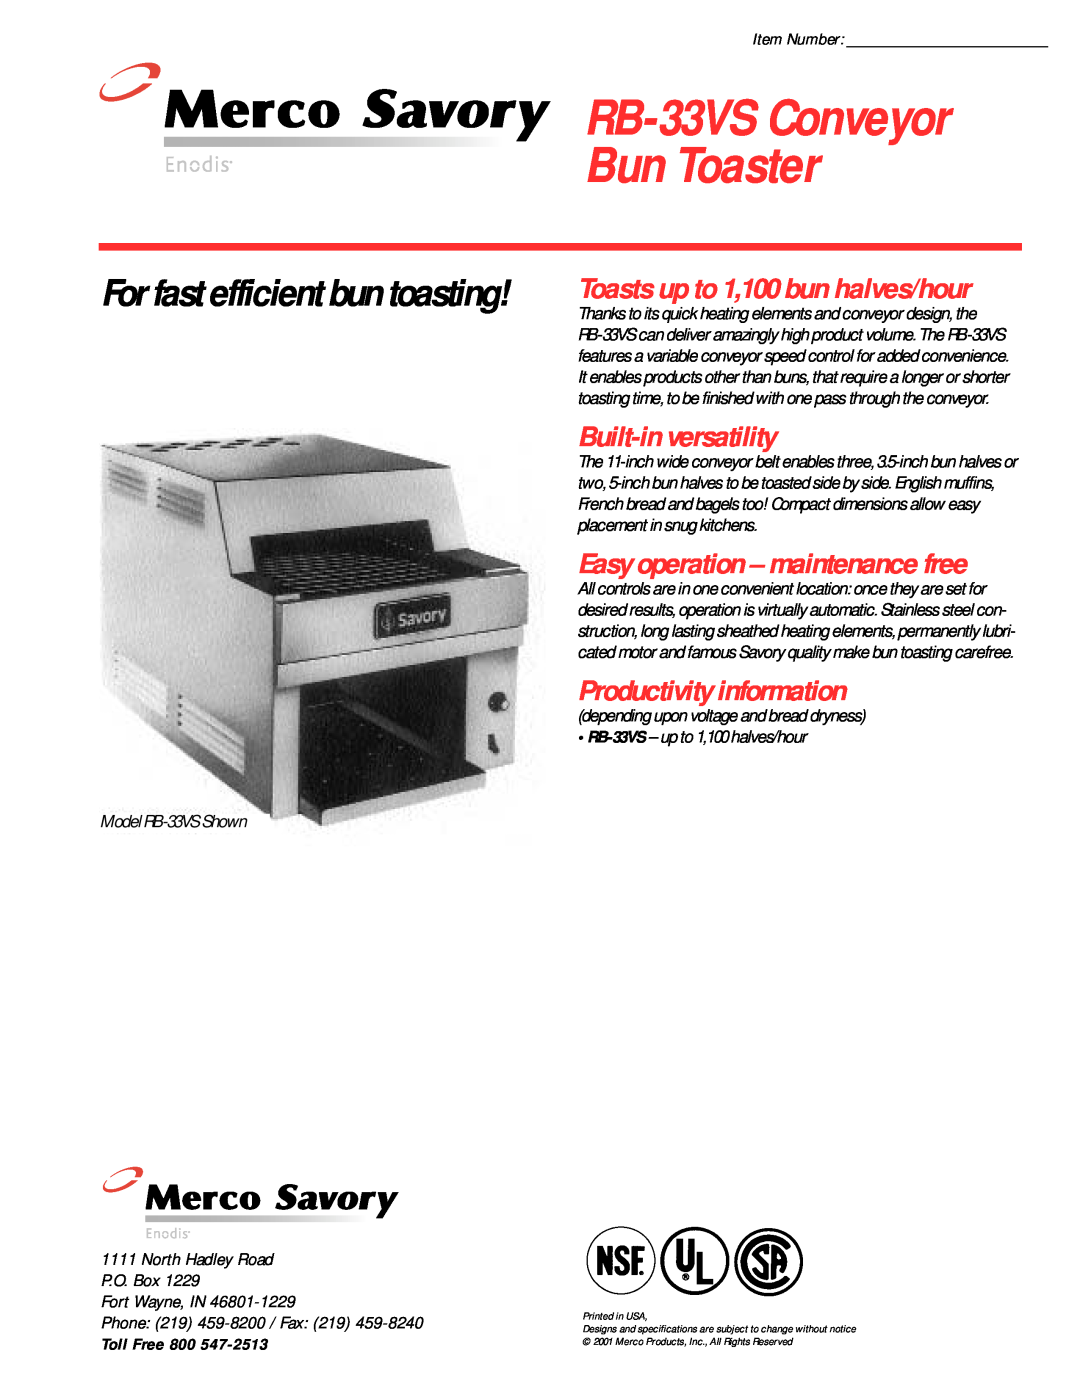 Merco Savory specifications Bun Toaster, Built-inversatility, Productivity information, RB-33VSConveyor, Item Number 